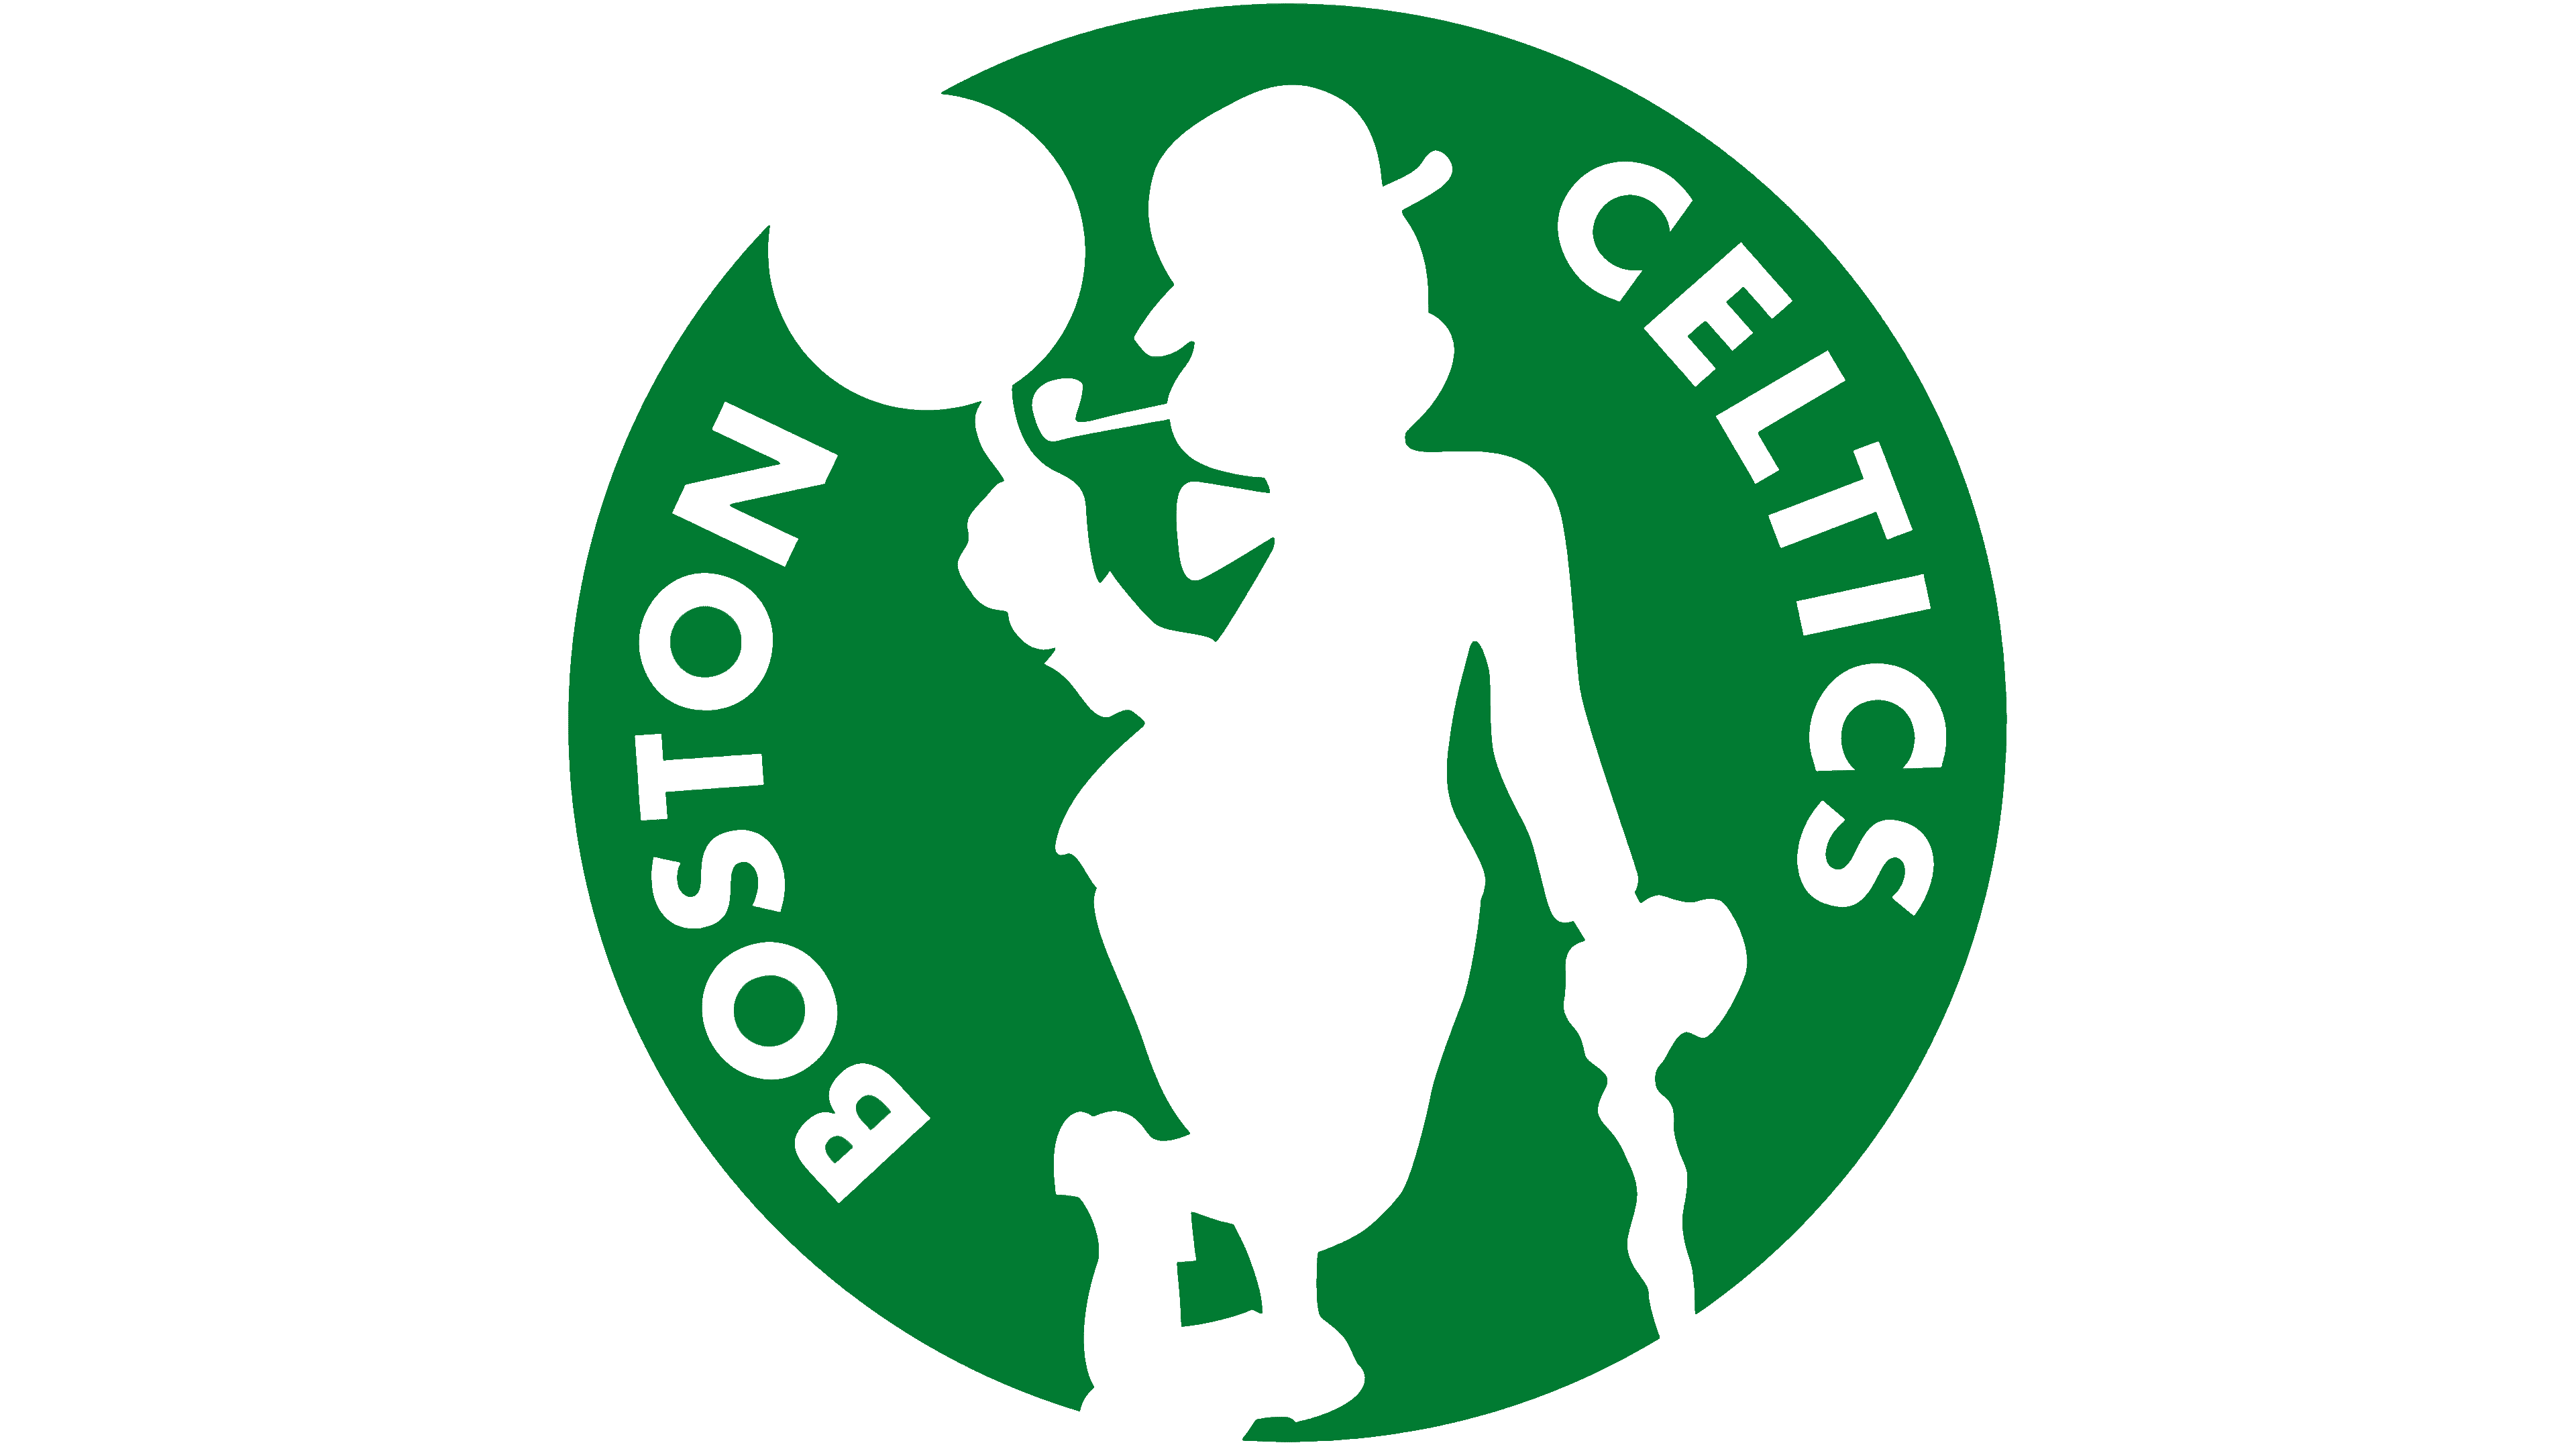 Boston Celtics scores